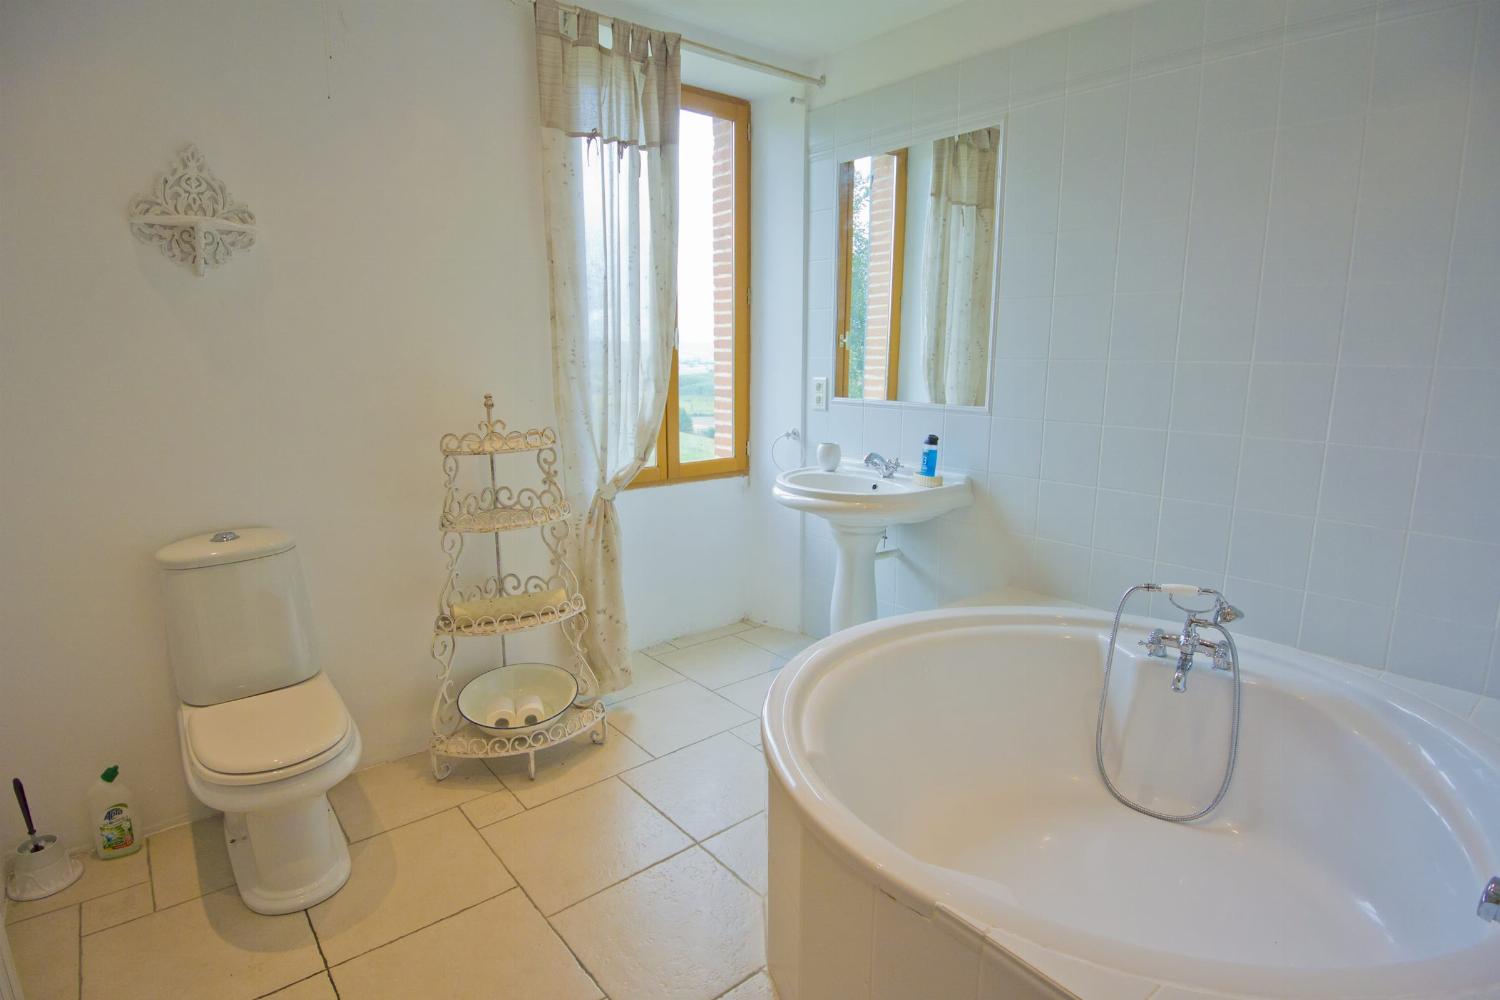 Bathroom | Rental home in Tarn-en-Garonne